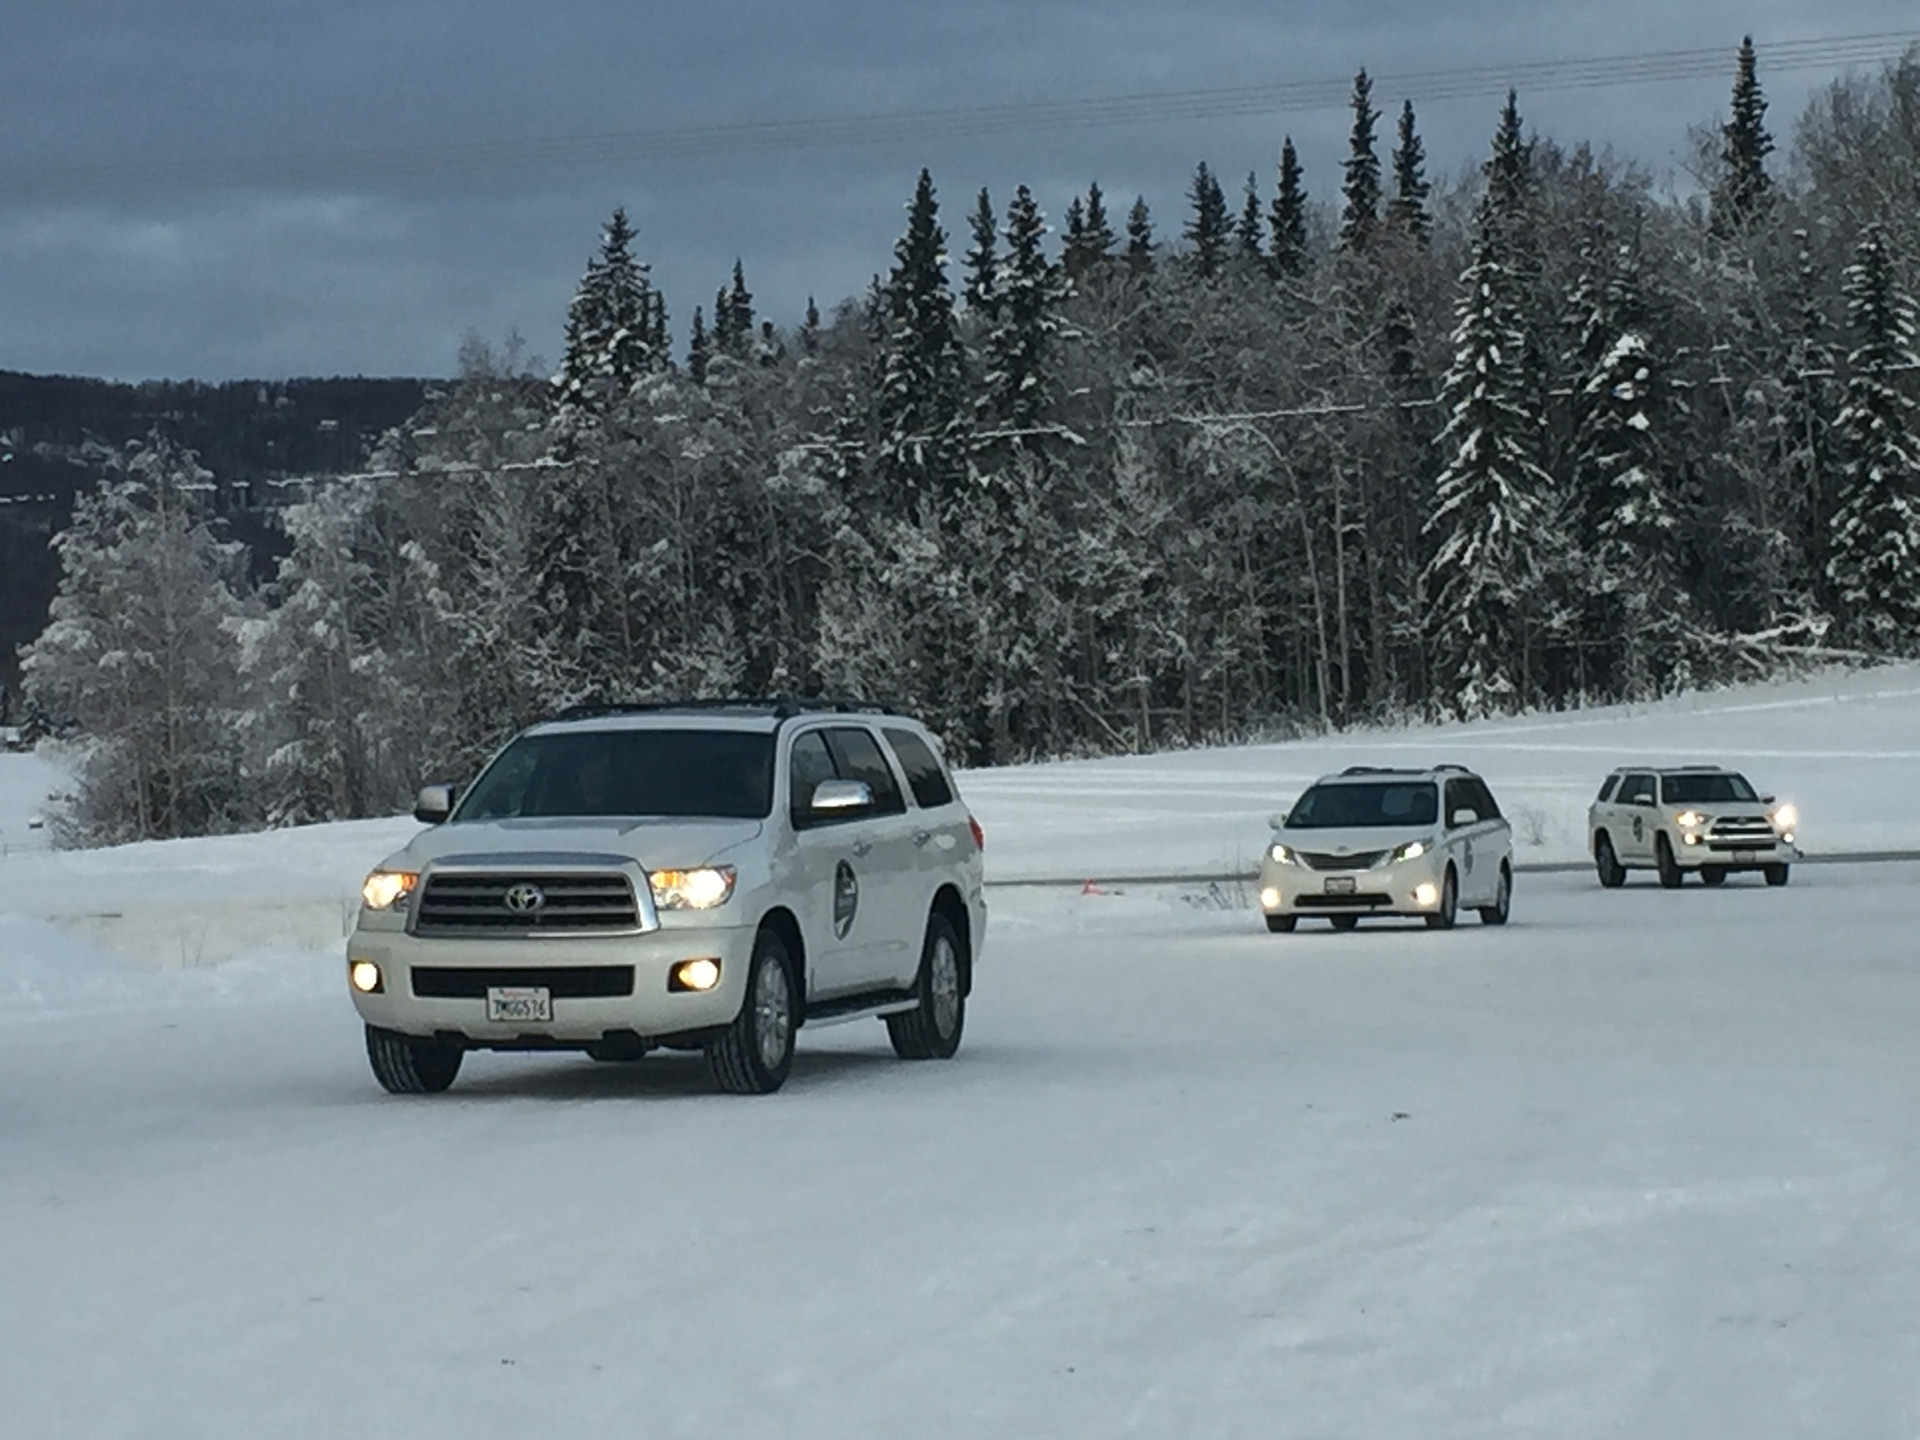 2015 driving project in North America (Alaska)